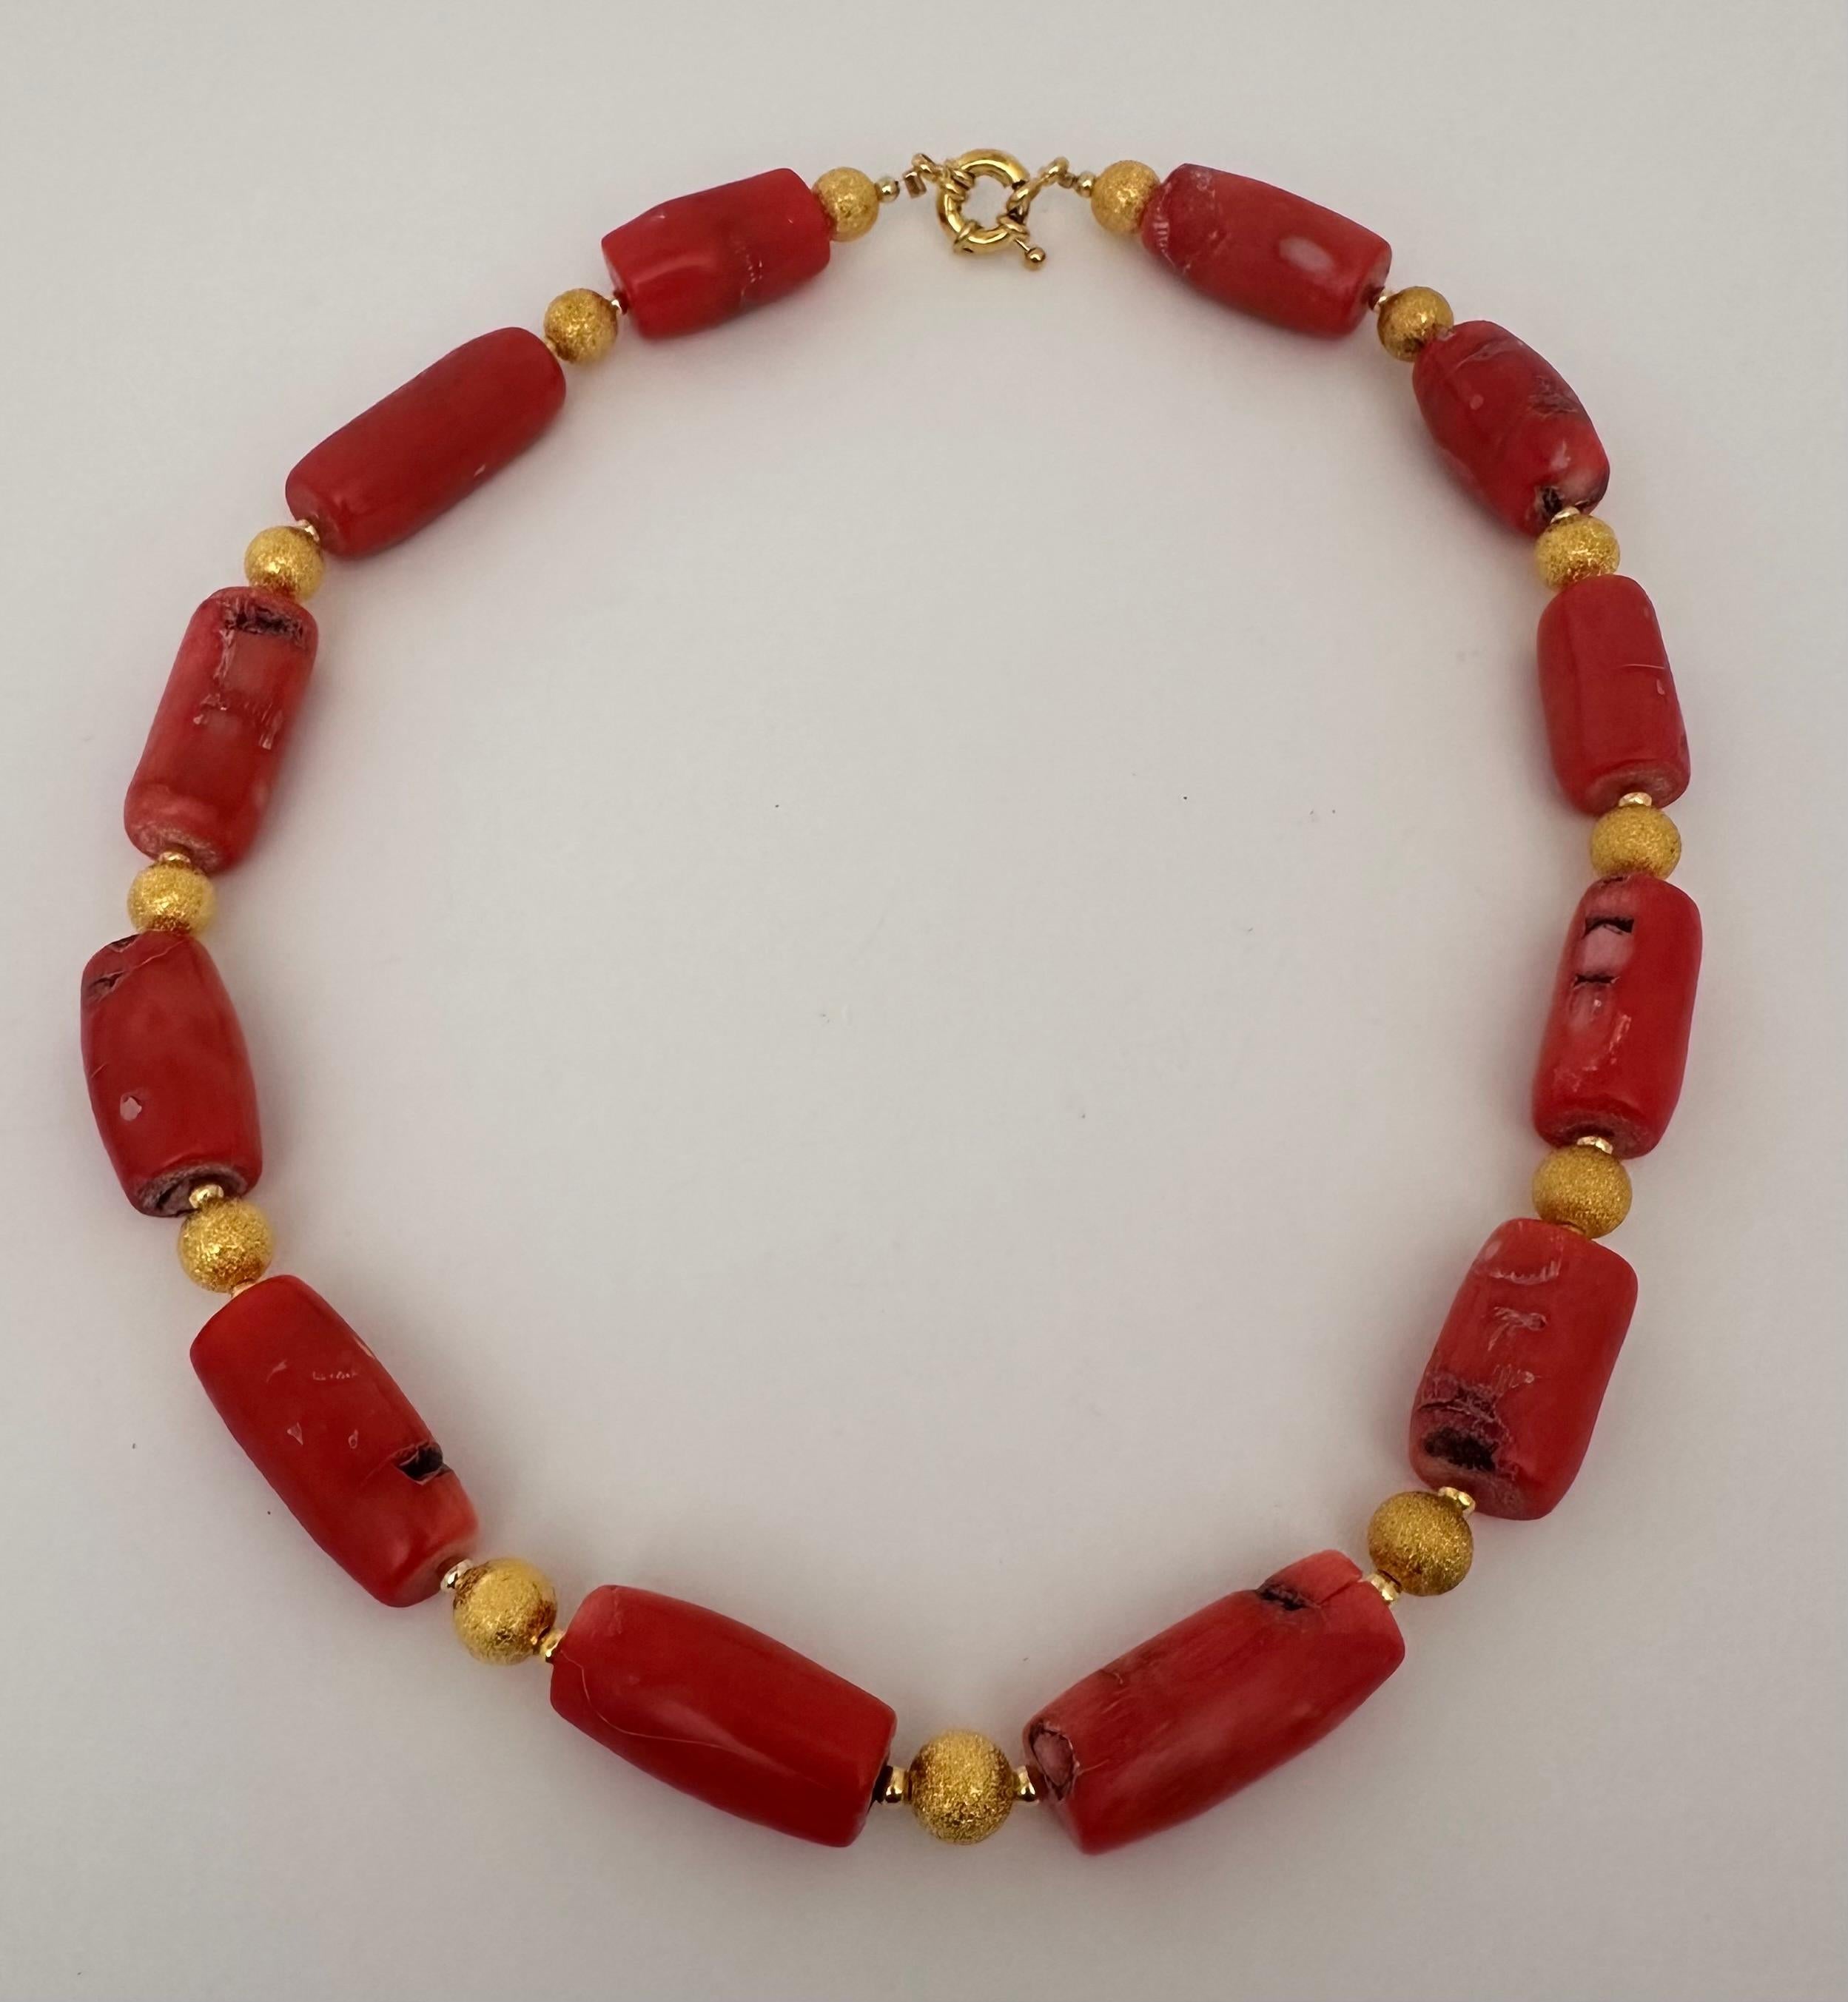 Handgefertigte vergoldete Perlen & Lachs Barrel Form Koralle Perlen 19